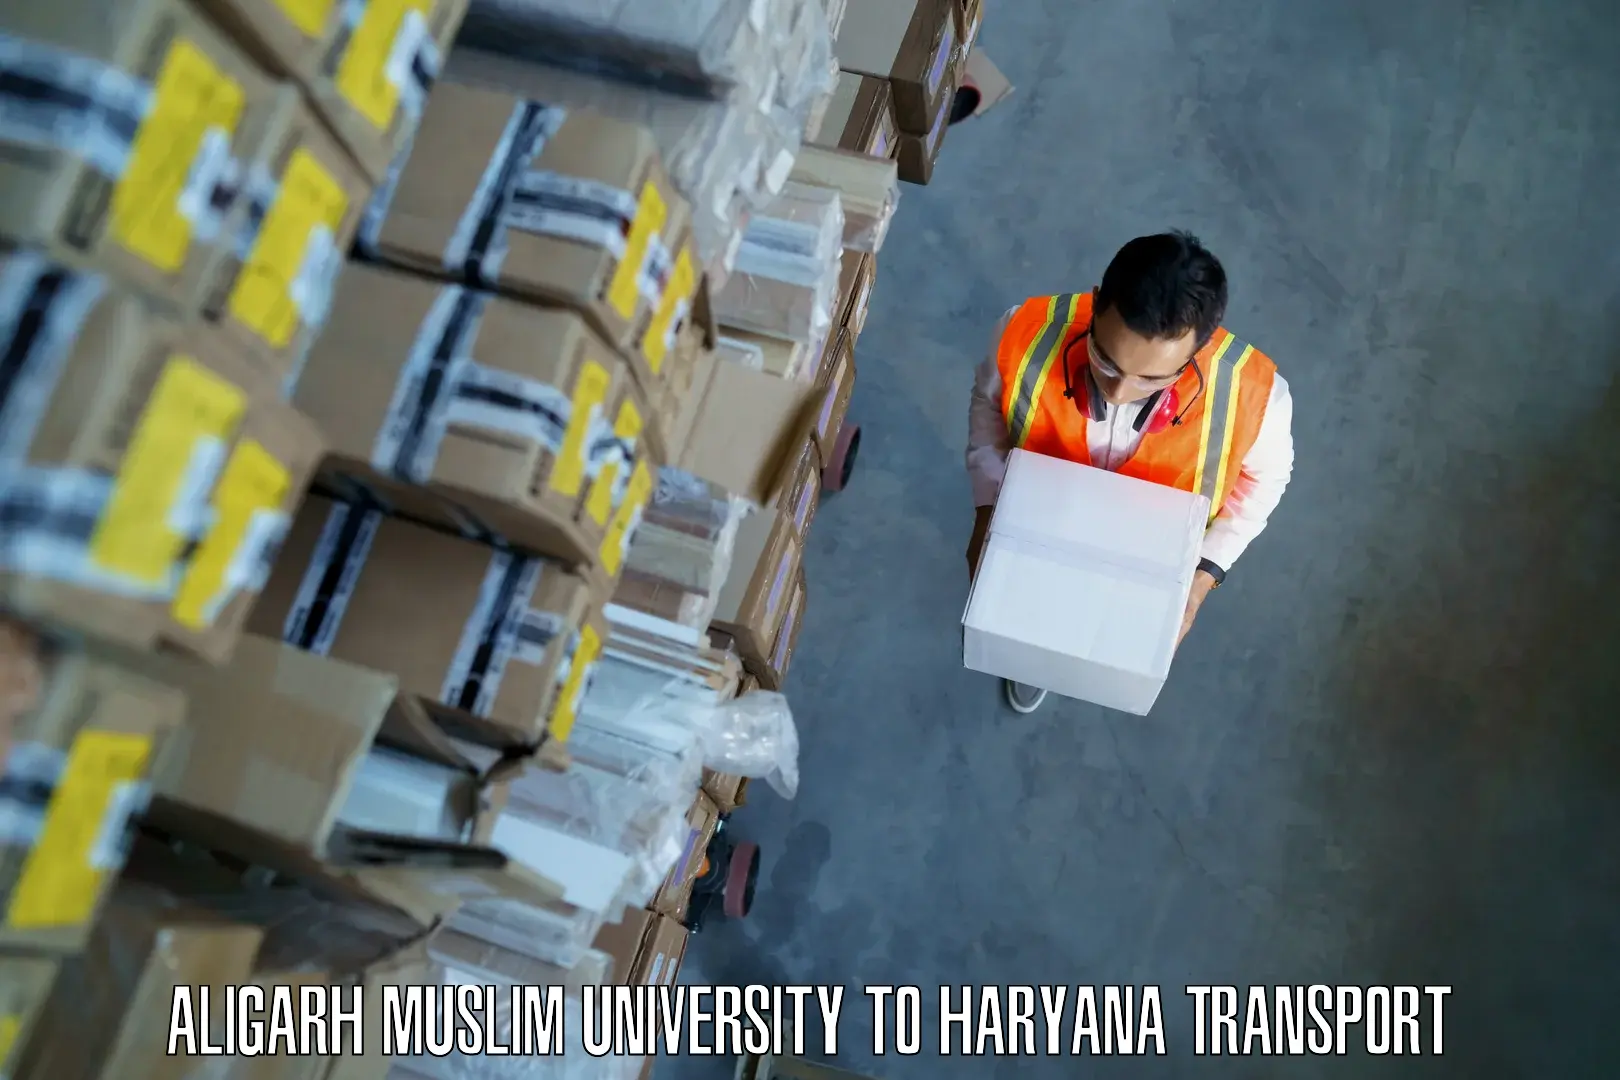 Online transport Aligarh Muslim University to Bilaspur Haryana